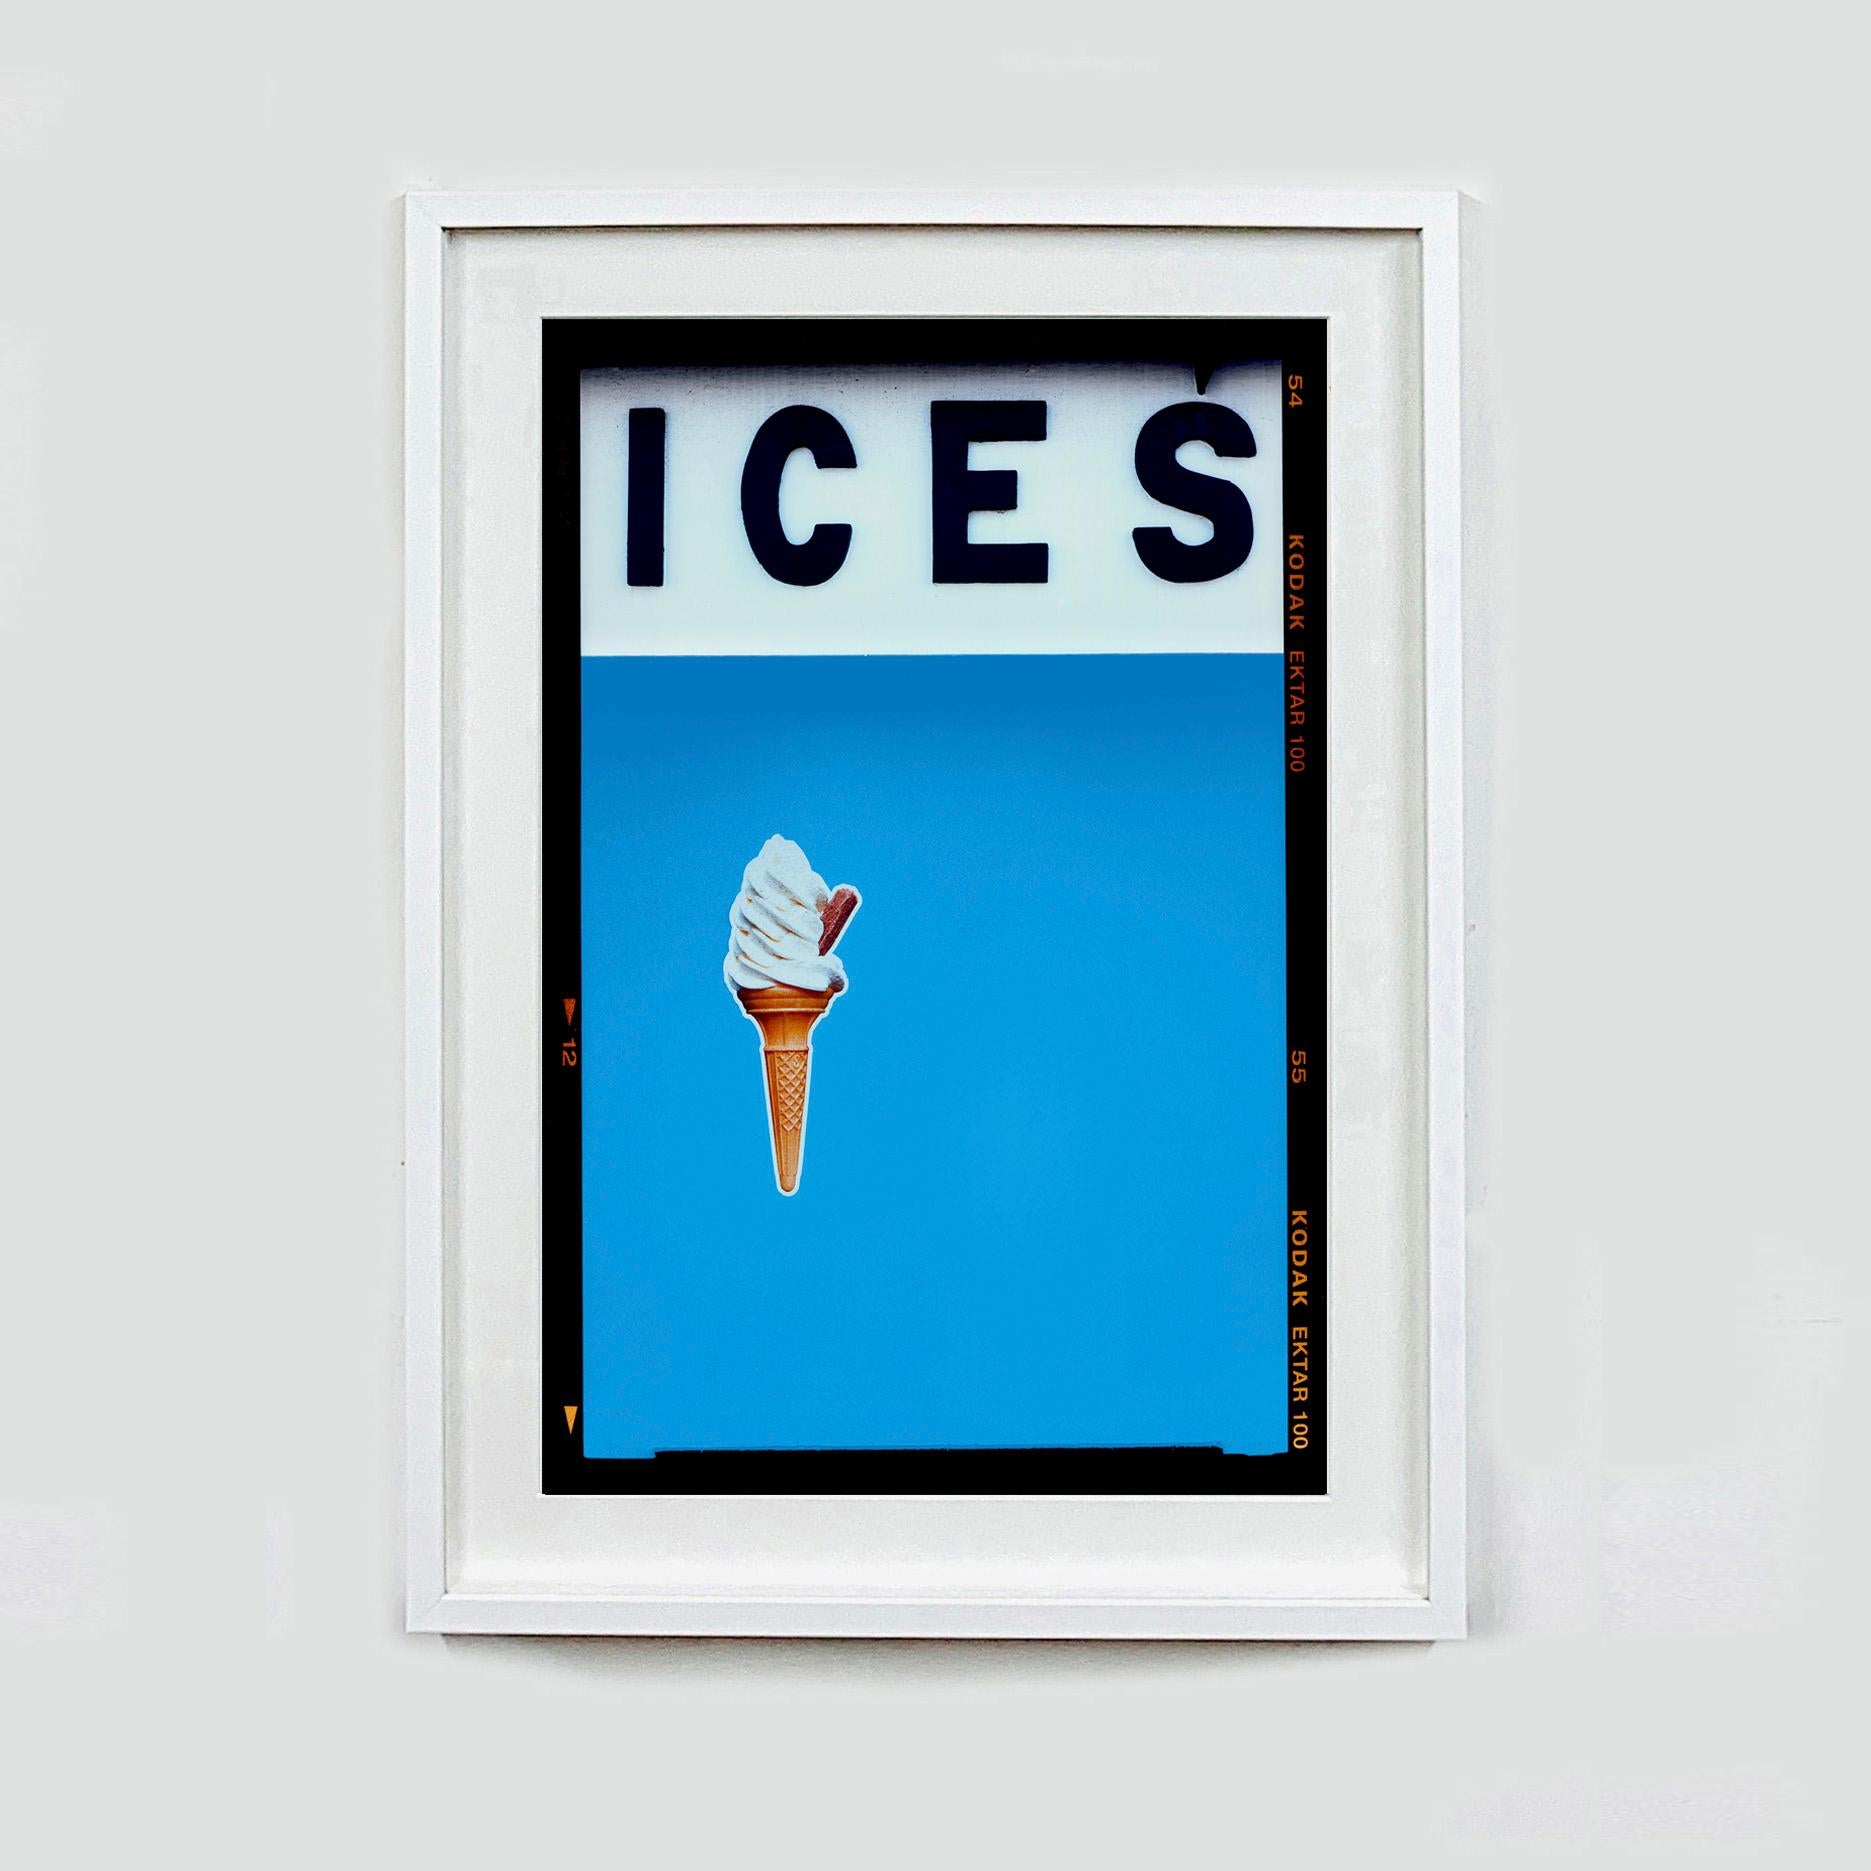 ICES - Four Framed Artworks - Pop Art Color Photography For Sale 4